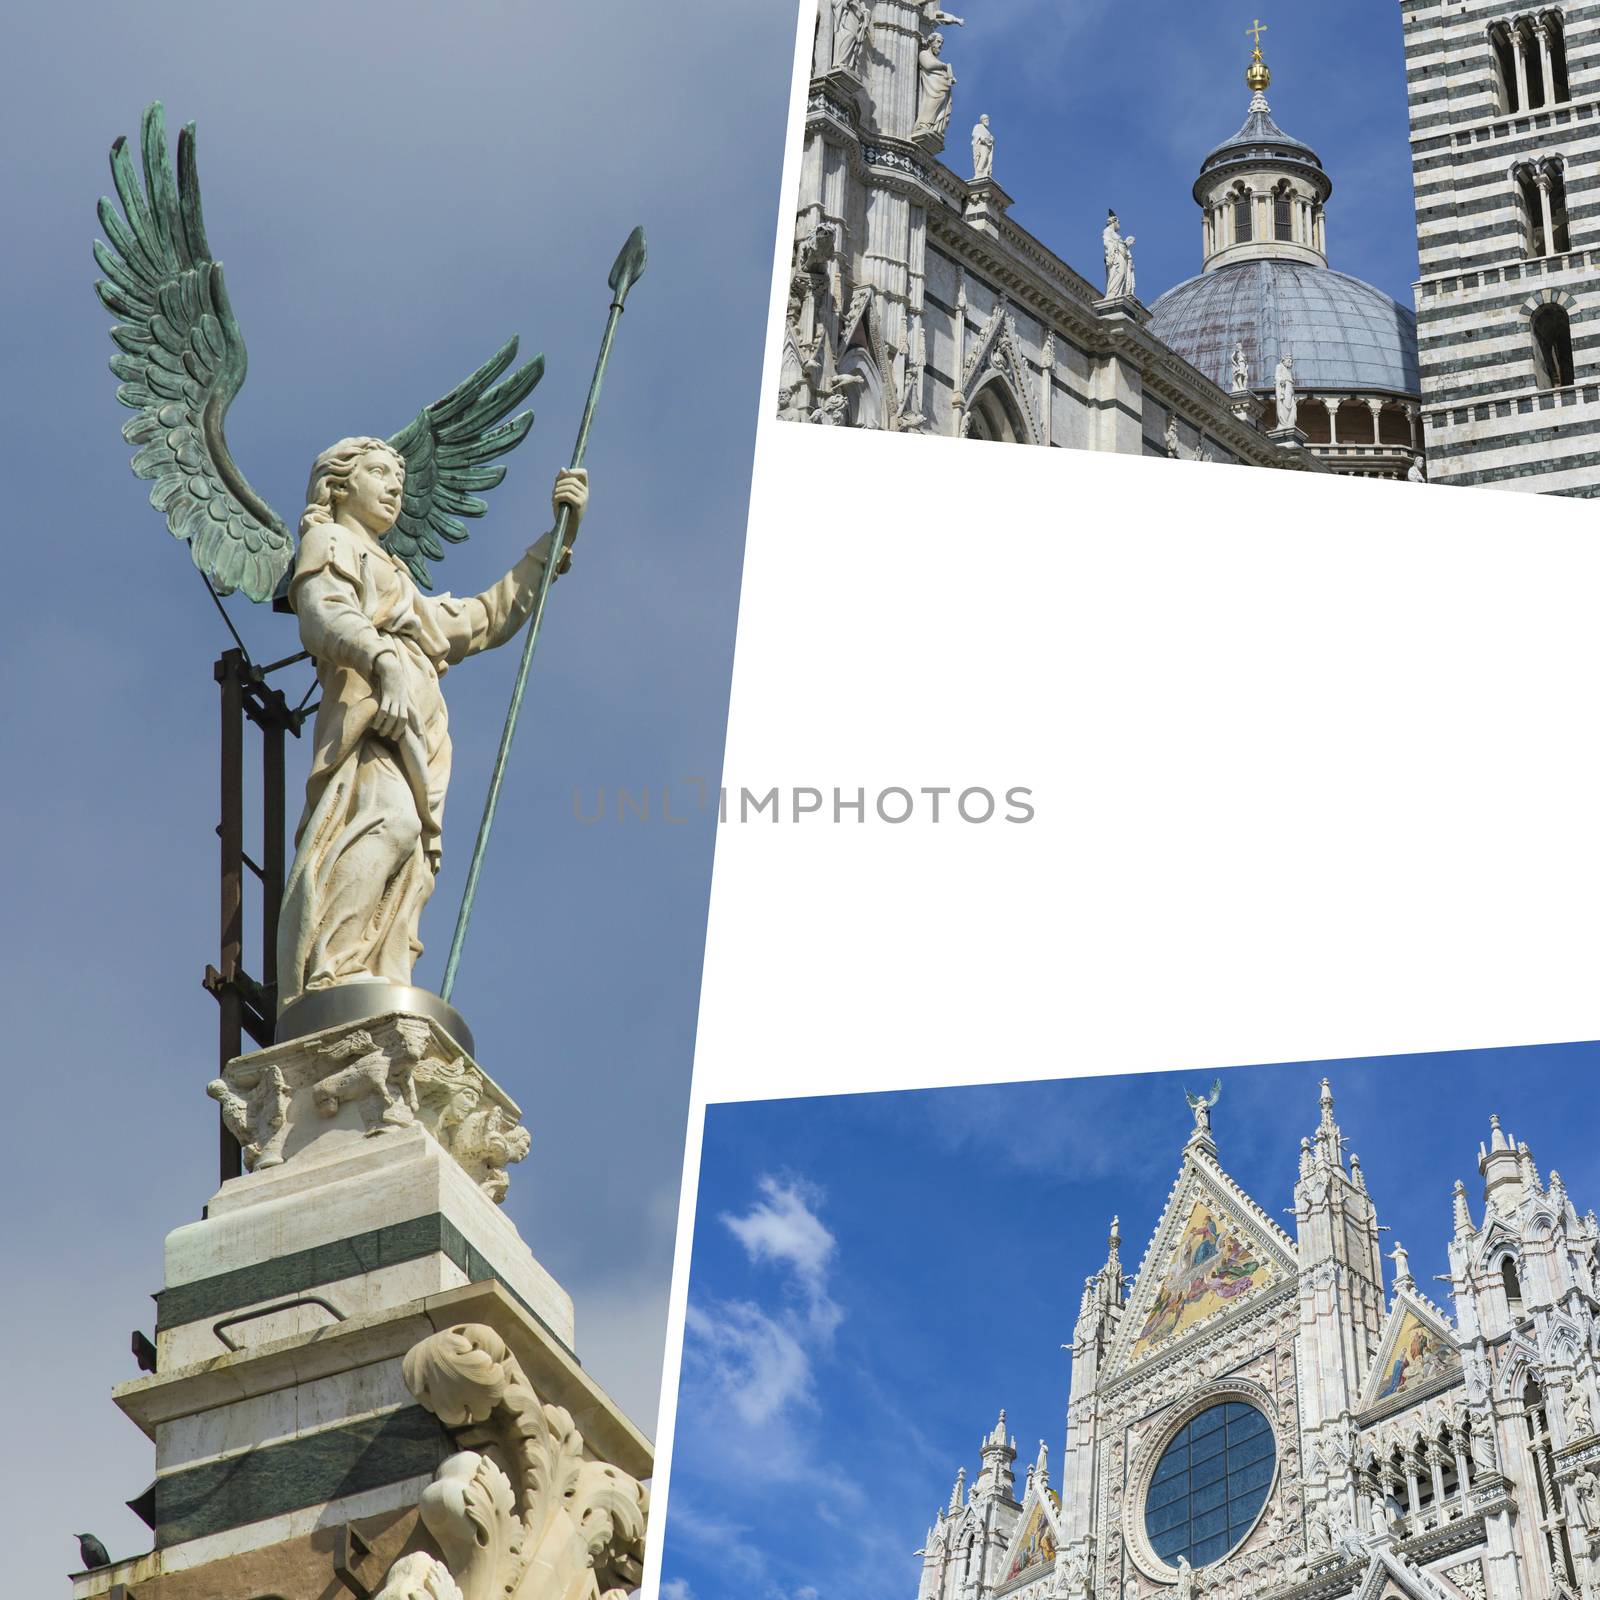 Touristic destination in Tuscany, Siena, photo collage by mariusz_prusaczyk